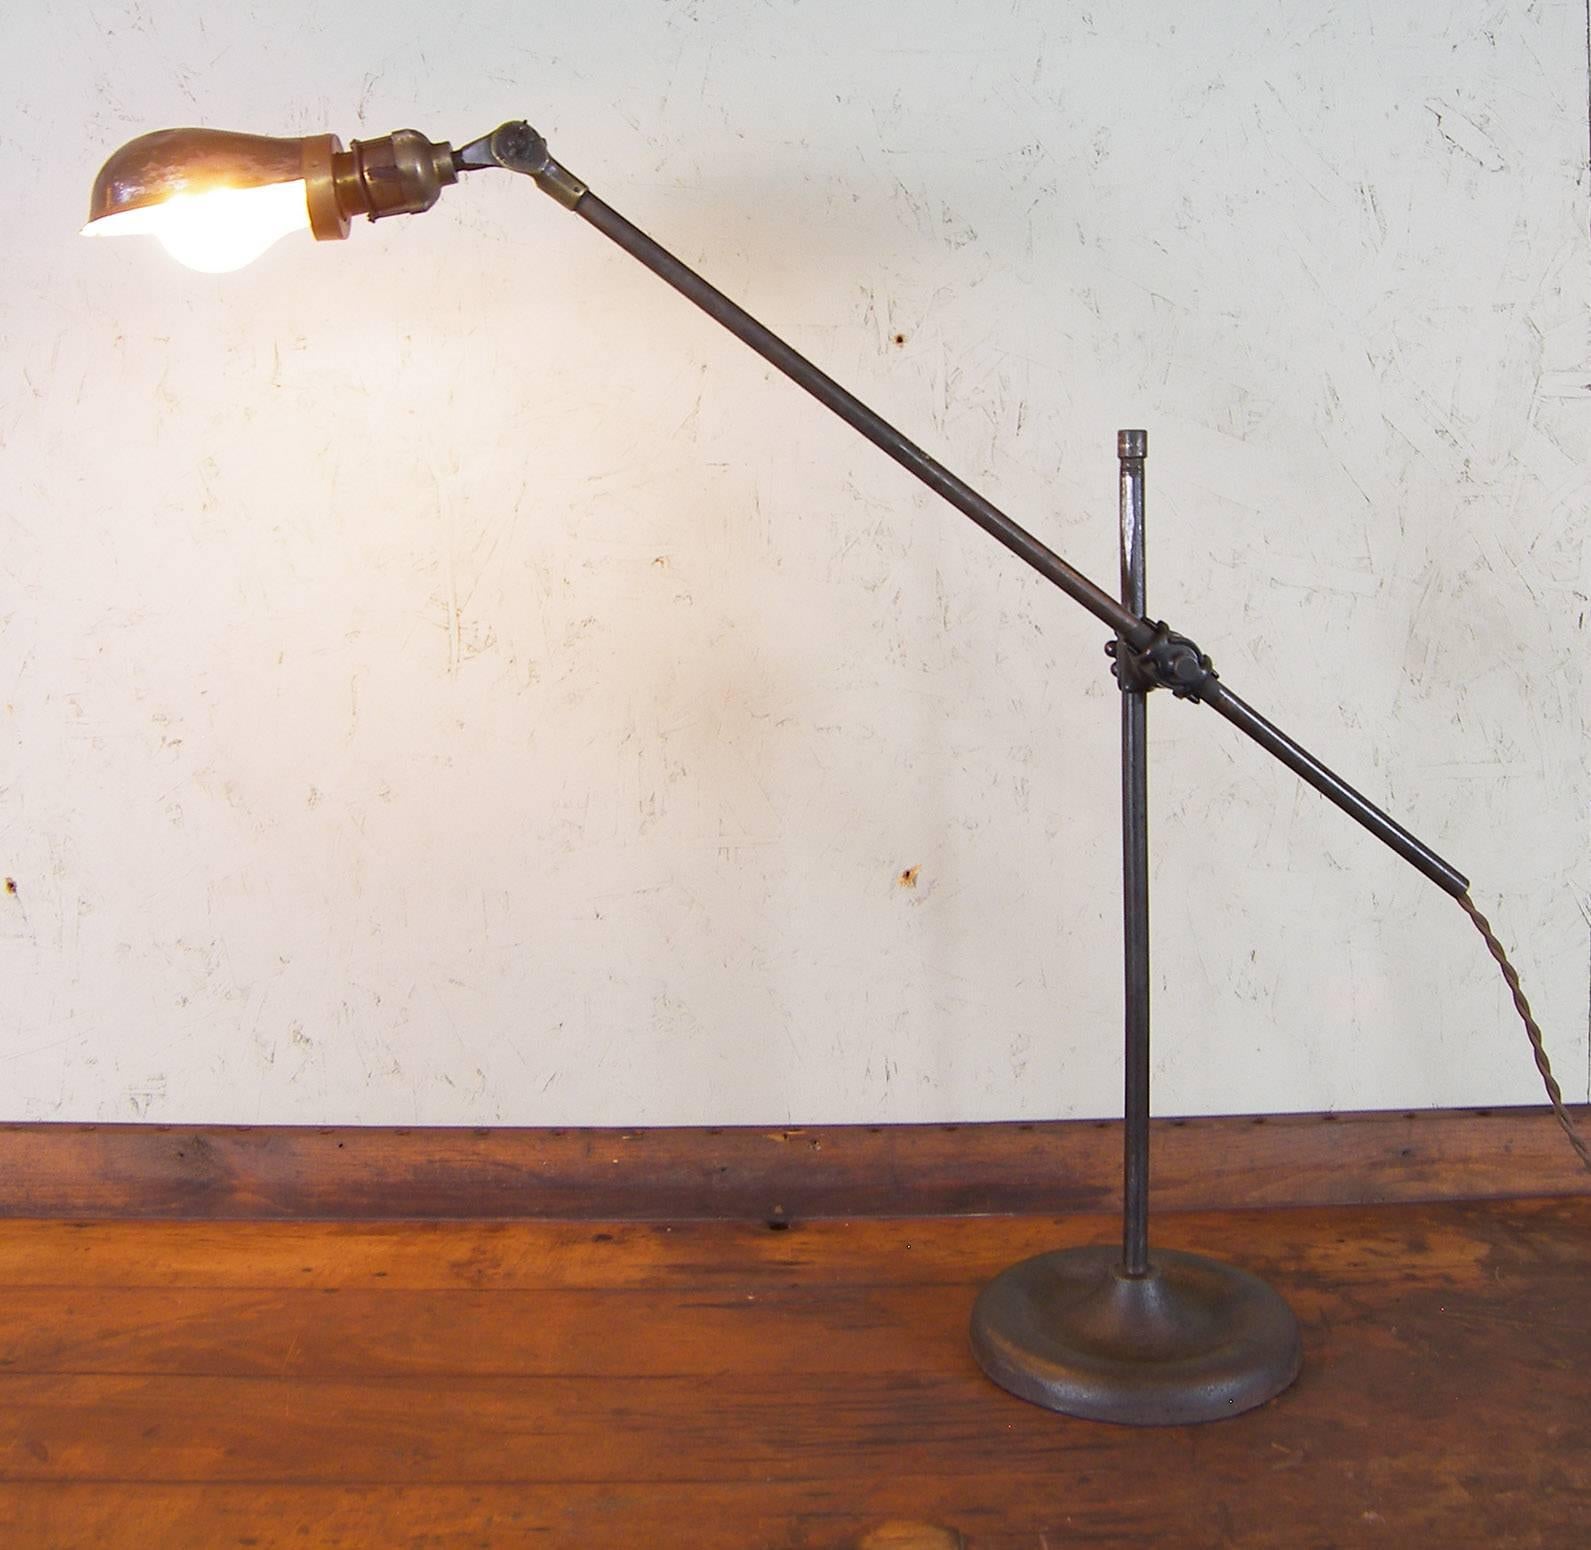 O. C. white iron, steel, metal, enamel desk task lamp / light. Top arm measures 24